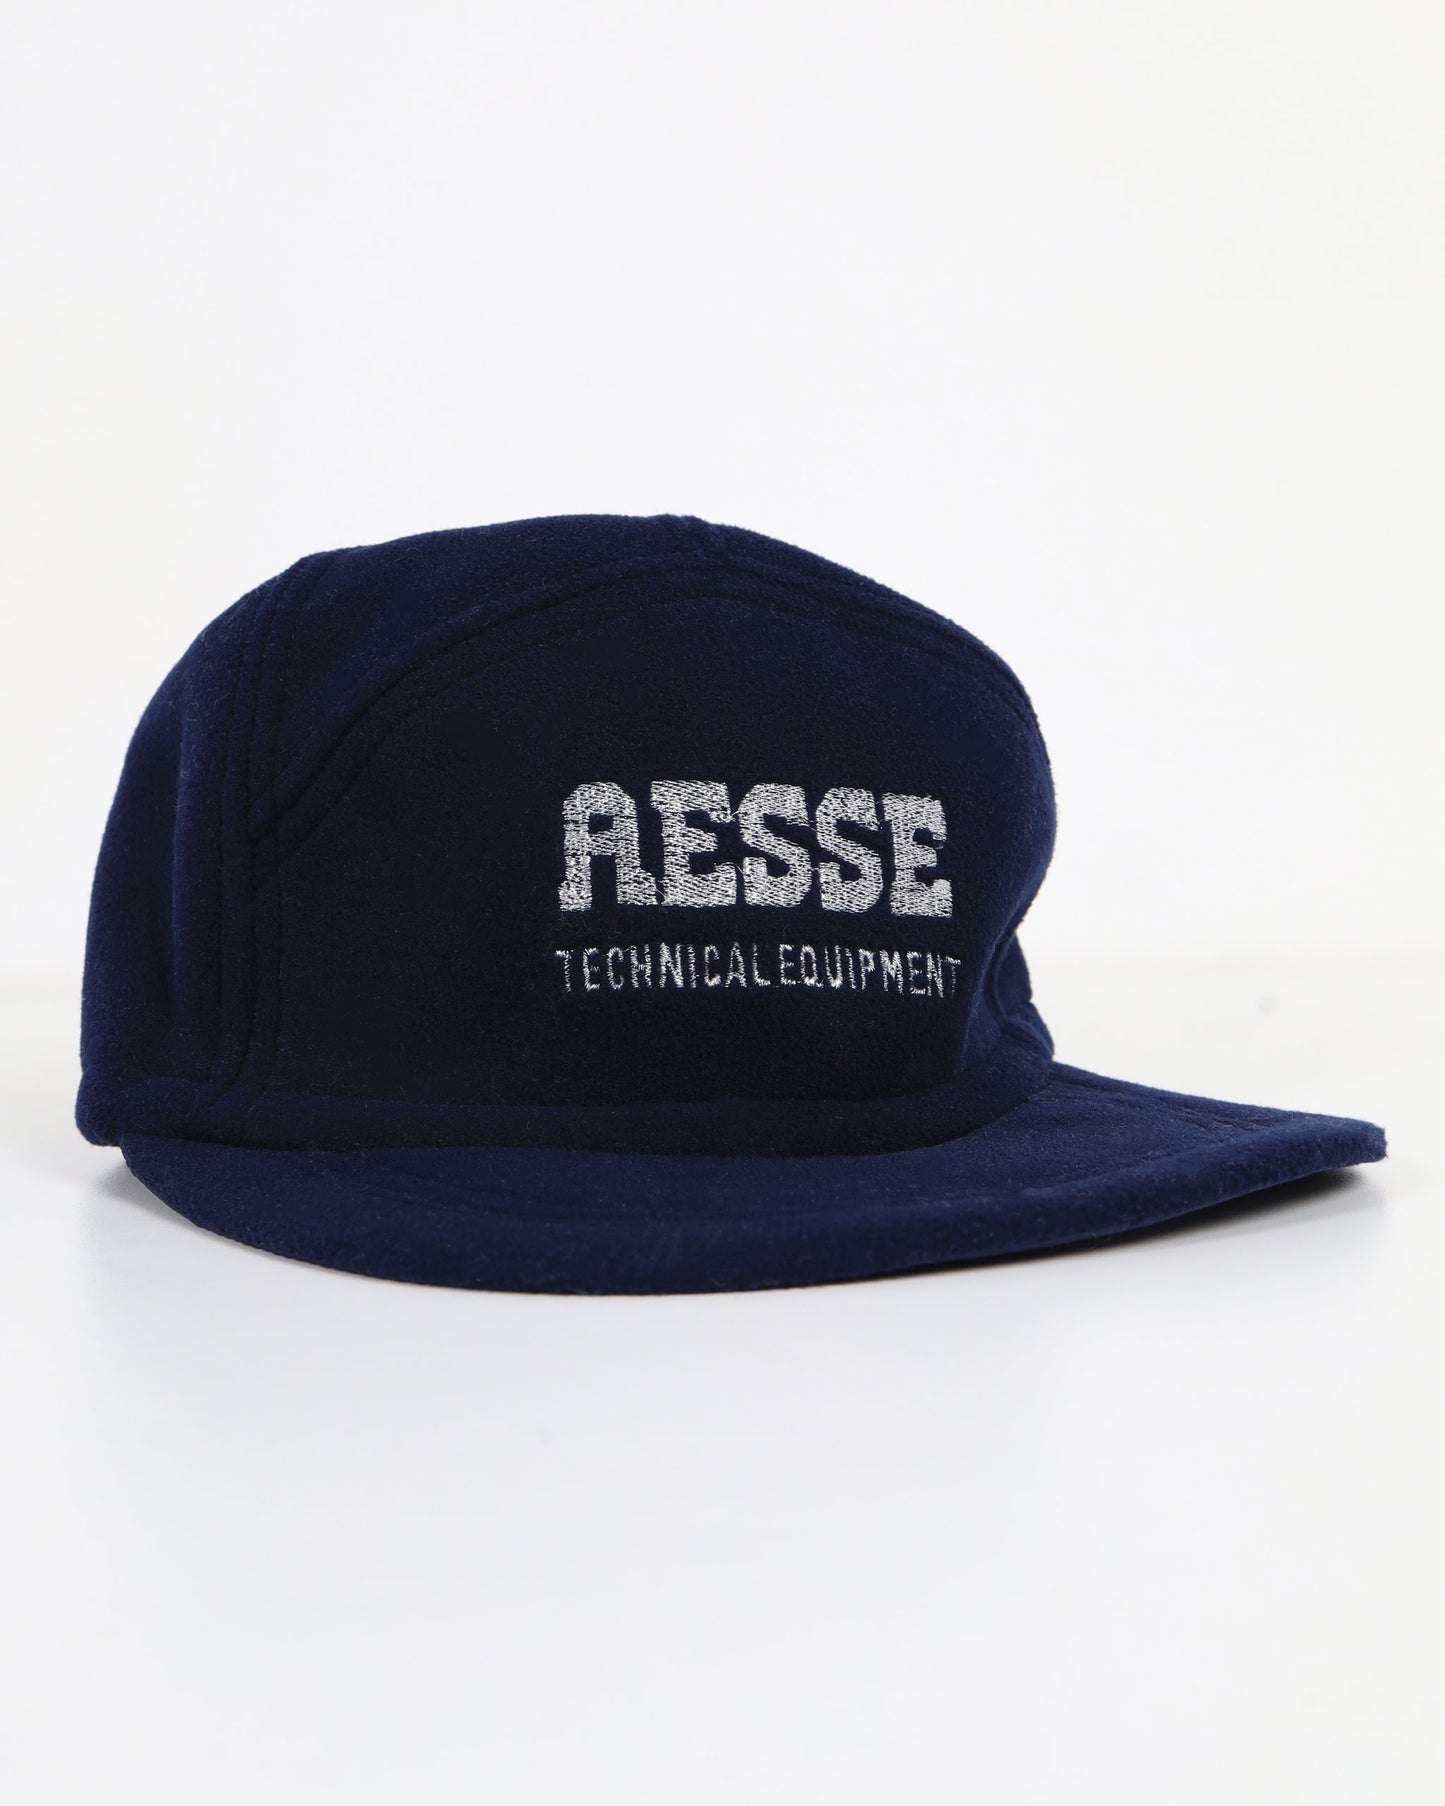 Cappello in pile Aesse vintage